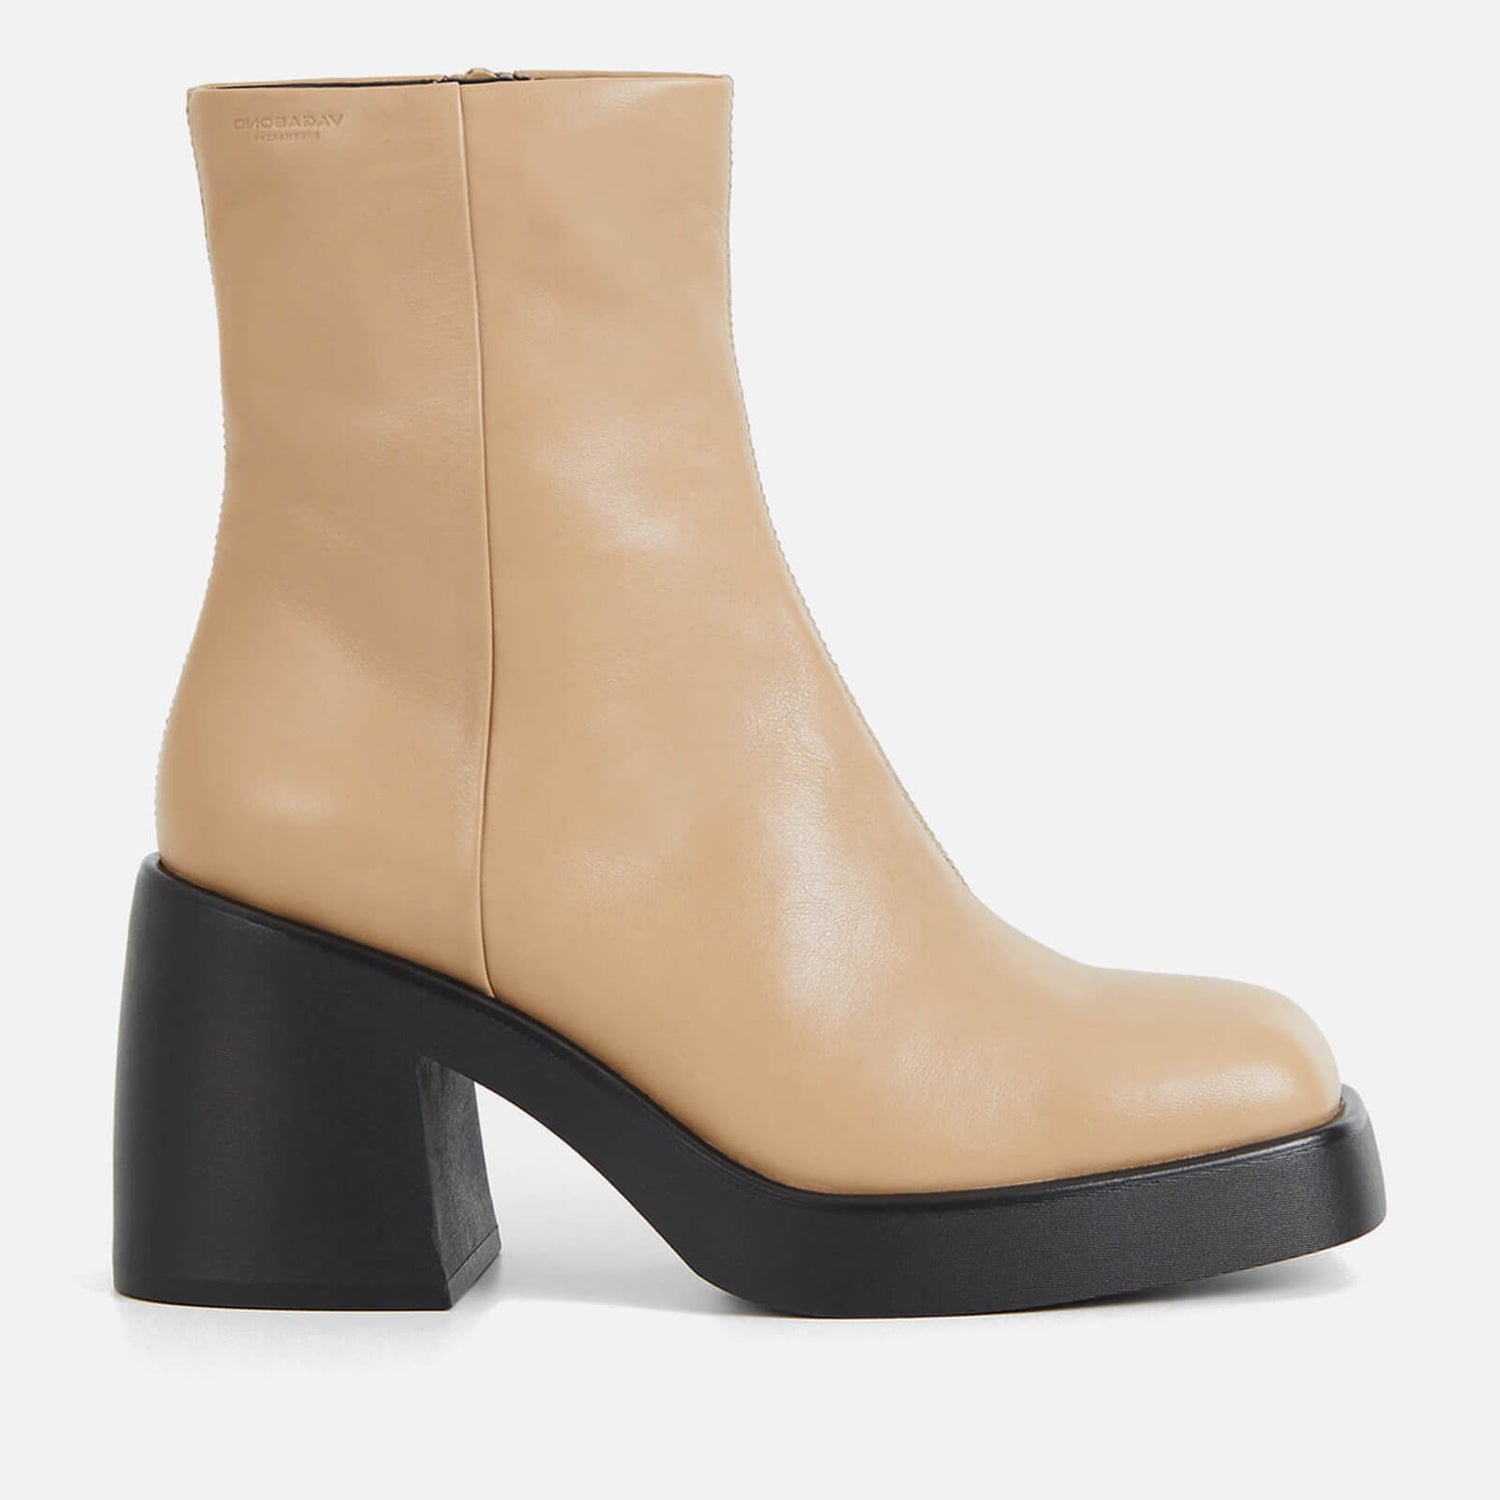 Vagabond Women's Brooke Leather Heeled Boots - UK 5